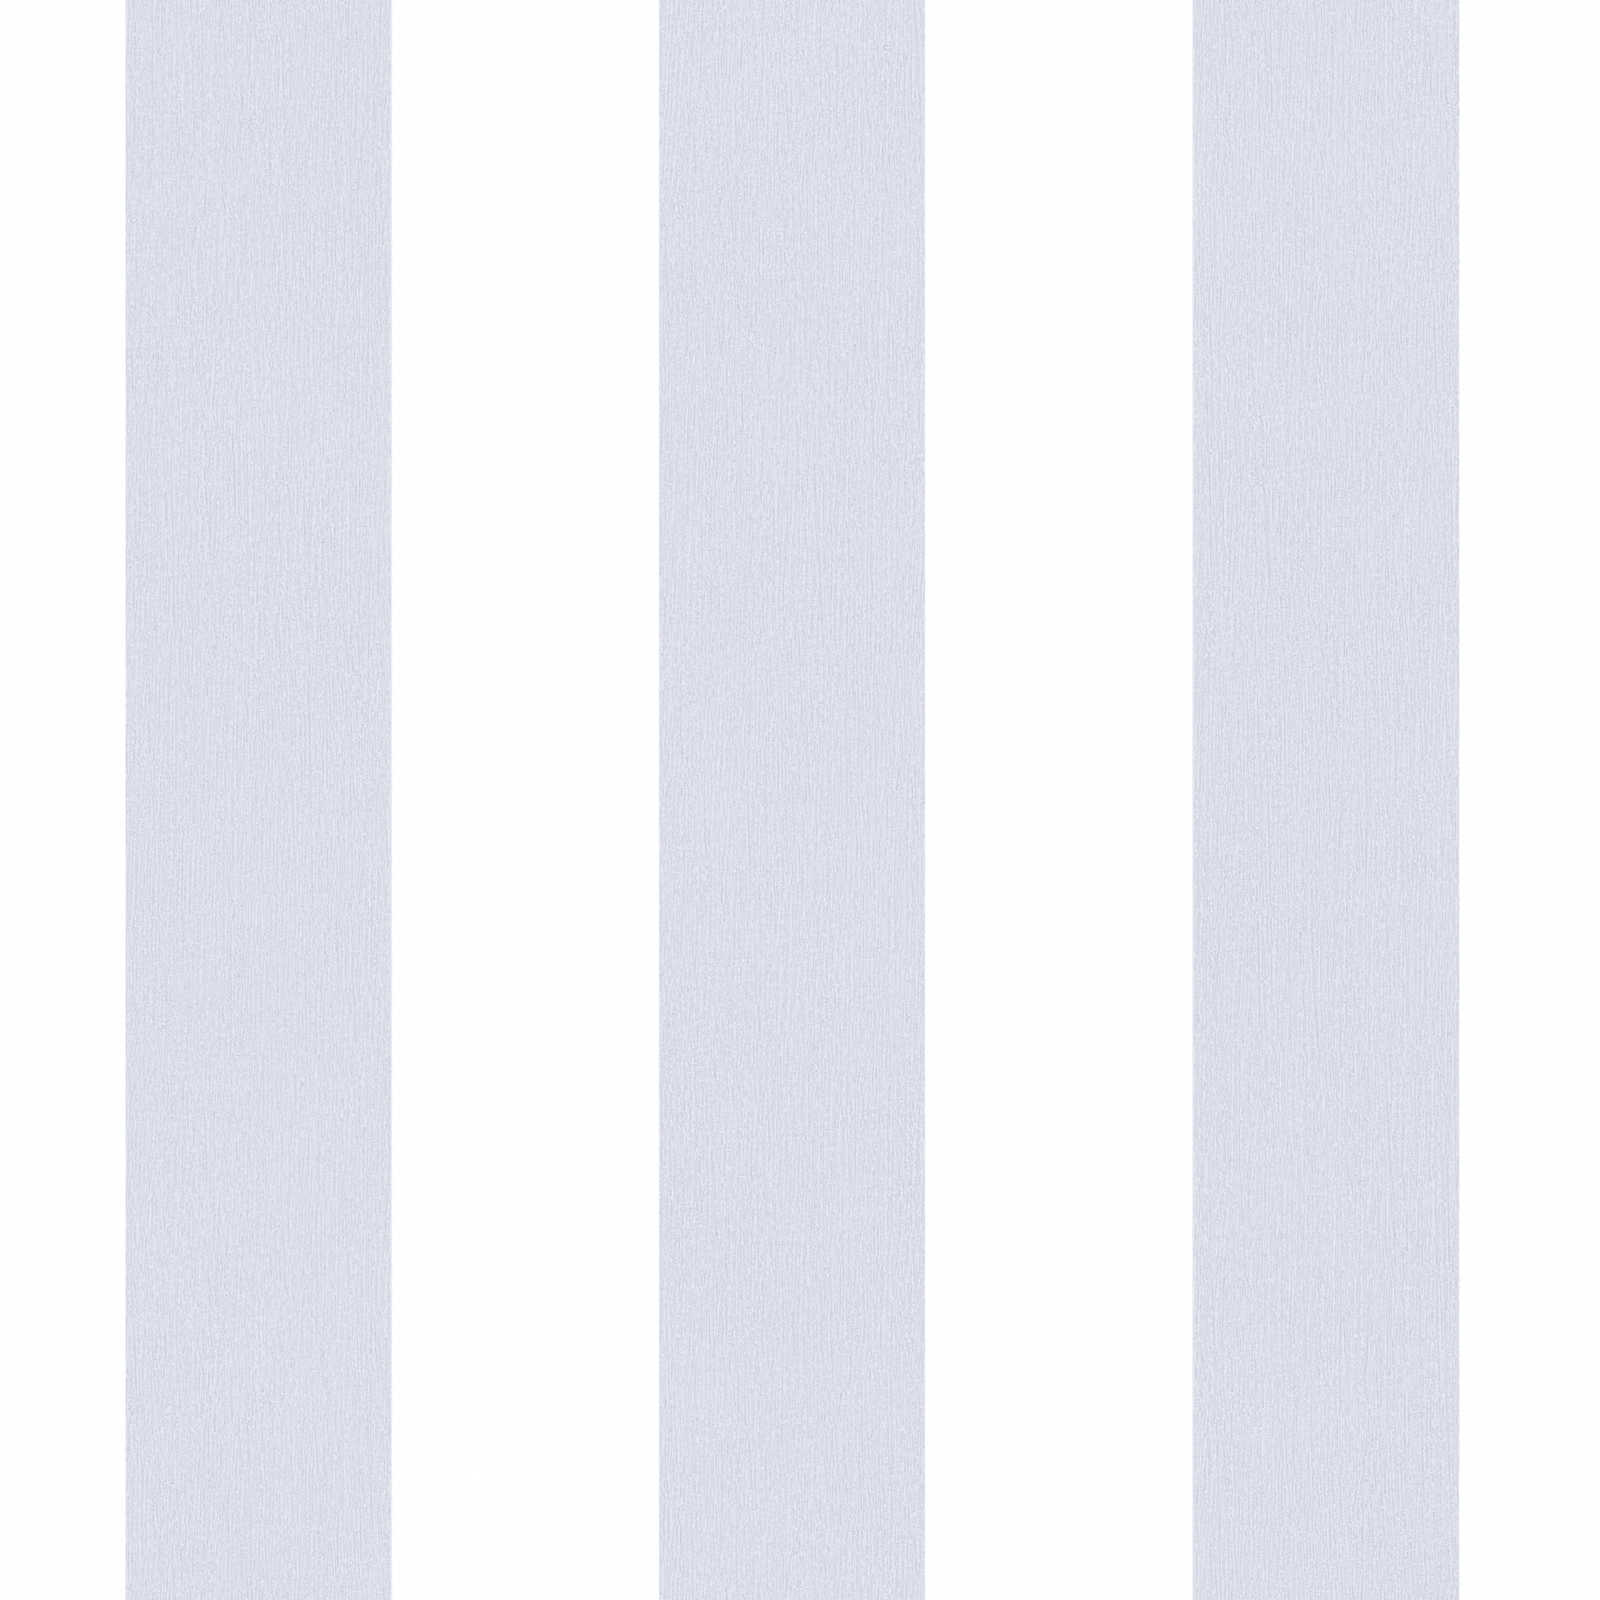 behang kinderkamer verticale strepen - grijs, wit
